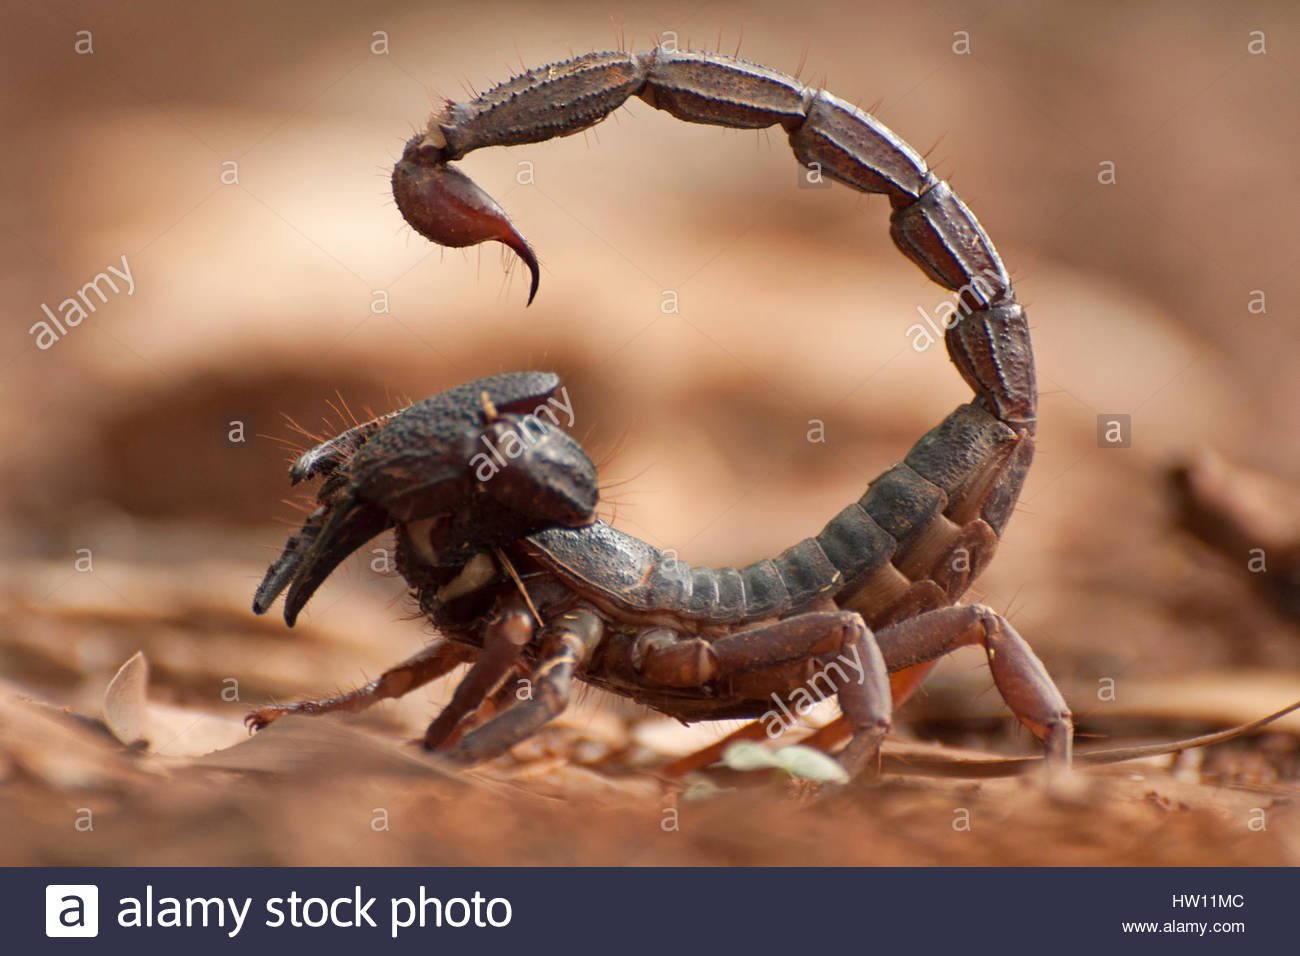 Animals scorpions. Скорпион Лейрус. Скорпион пандинус Виаторис. Жвалы скорпиона. Голубой Императорский Скорпион.